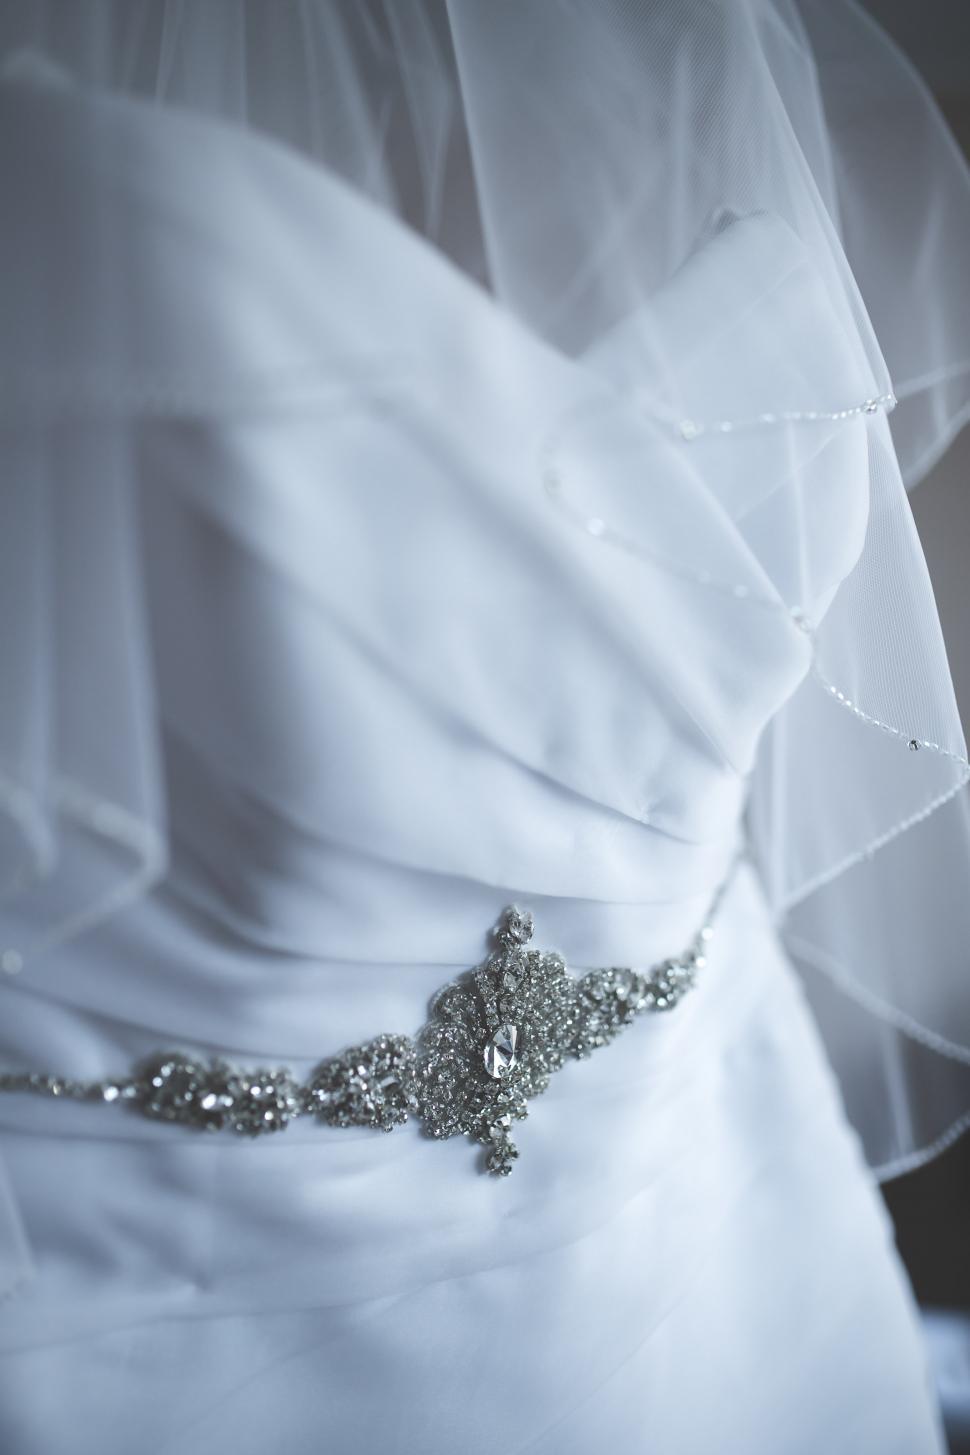 Free Image of Close Up of Wedding Dress With Diamond Brooch 